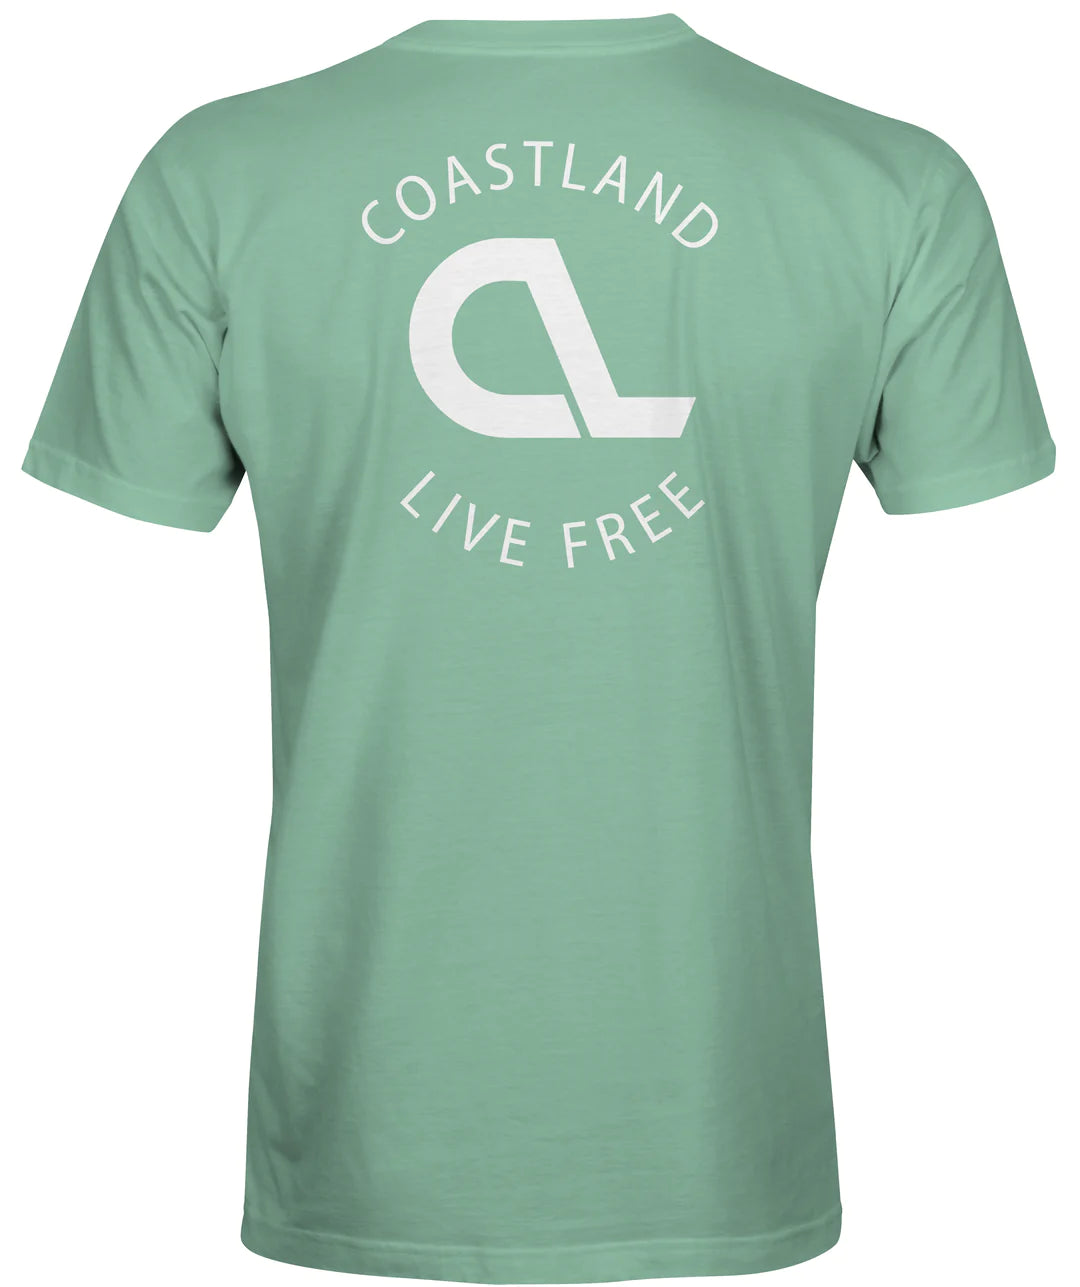 Coastland Apparel-Mint Live Free Tee